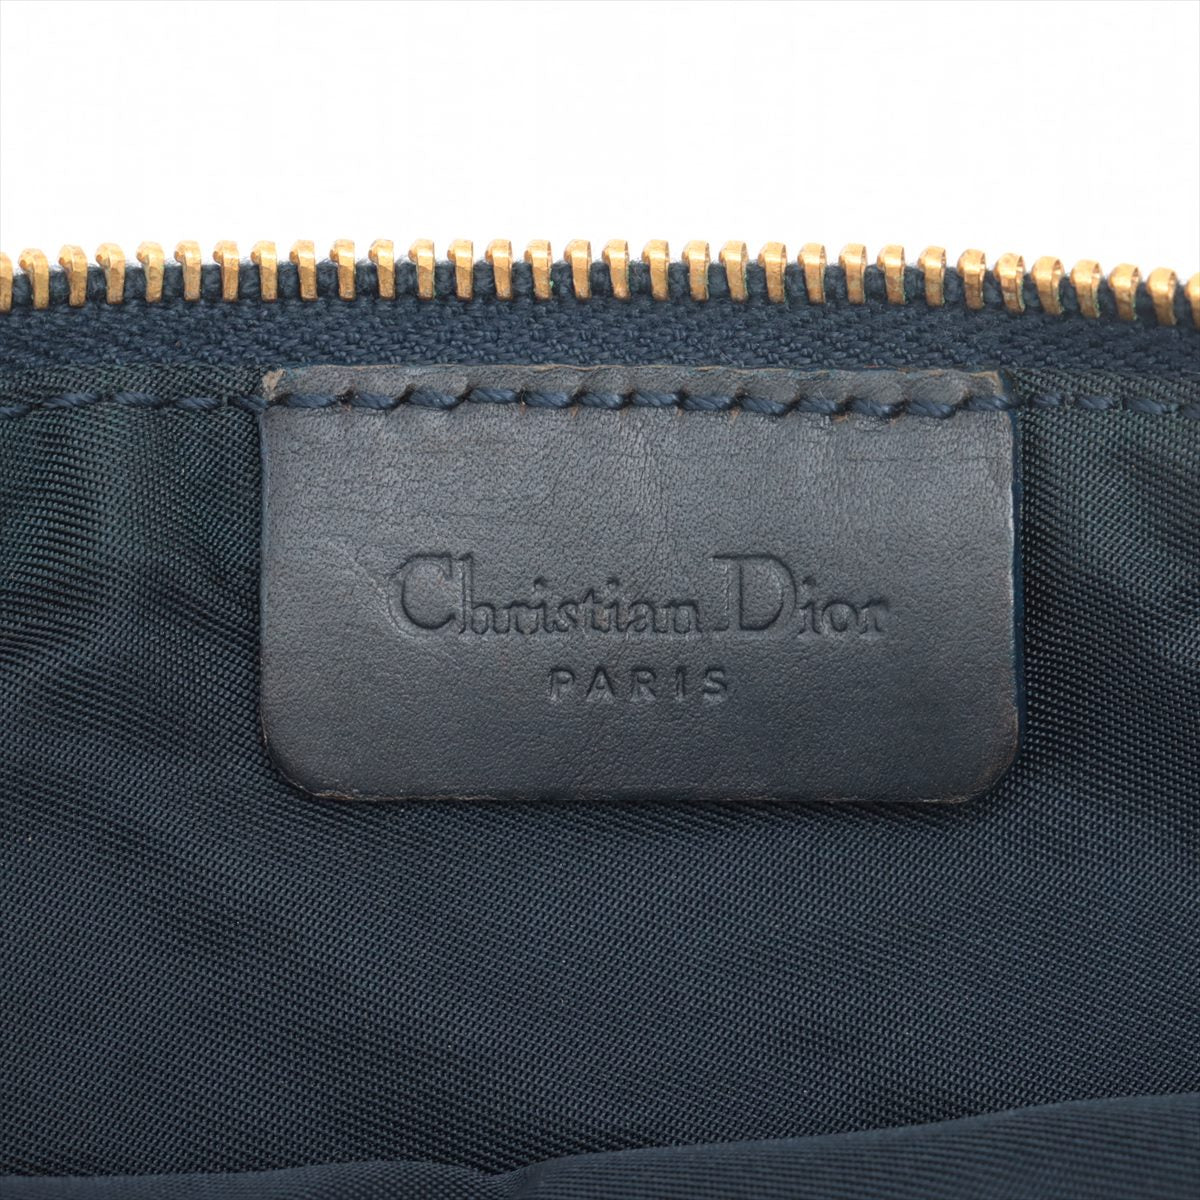 Christian Dior Trotter Saddle Bag Canvas & leather Shoulder bag Navy blue Leather zipper pull is torn and damaged